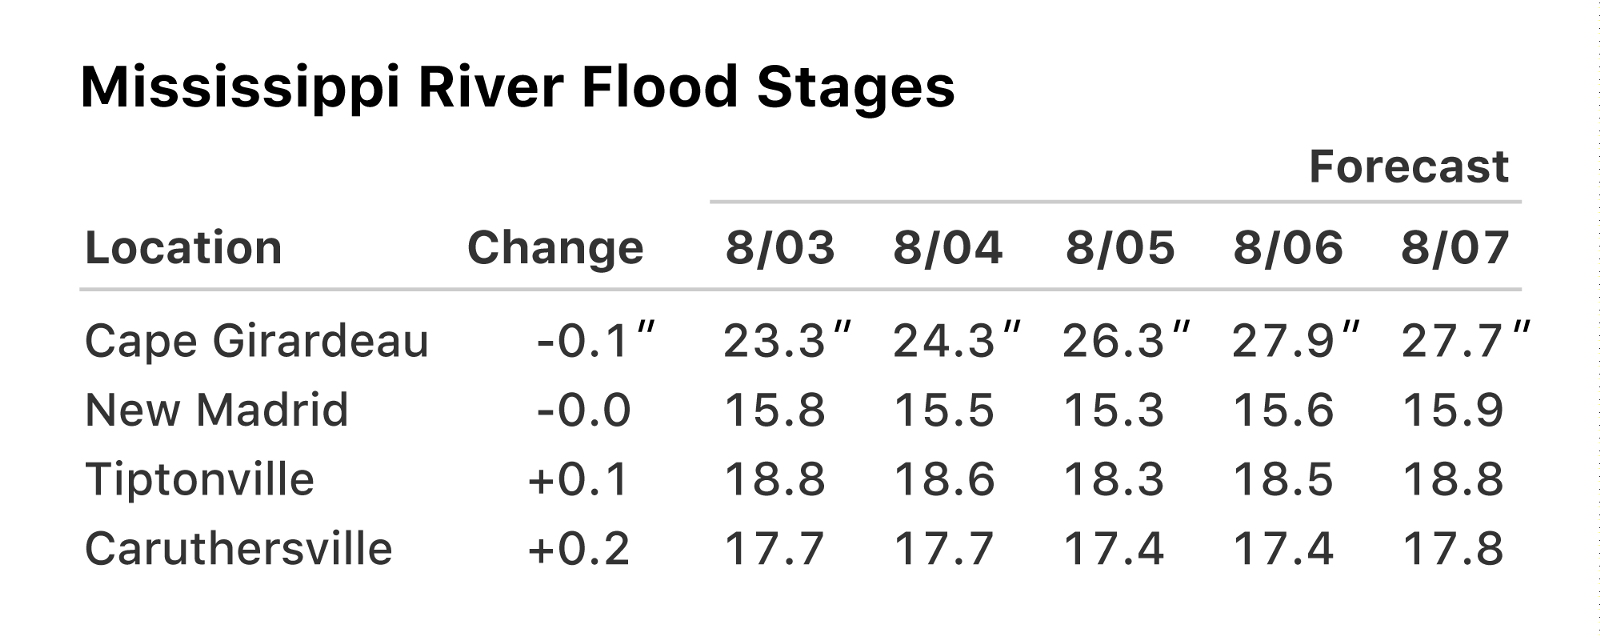 Mississippi River Flood Stage Forecast - NOAA